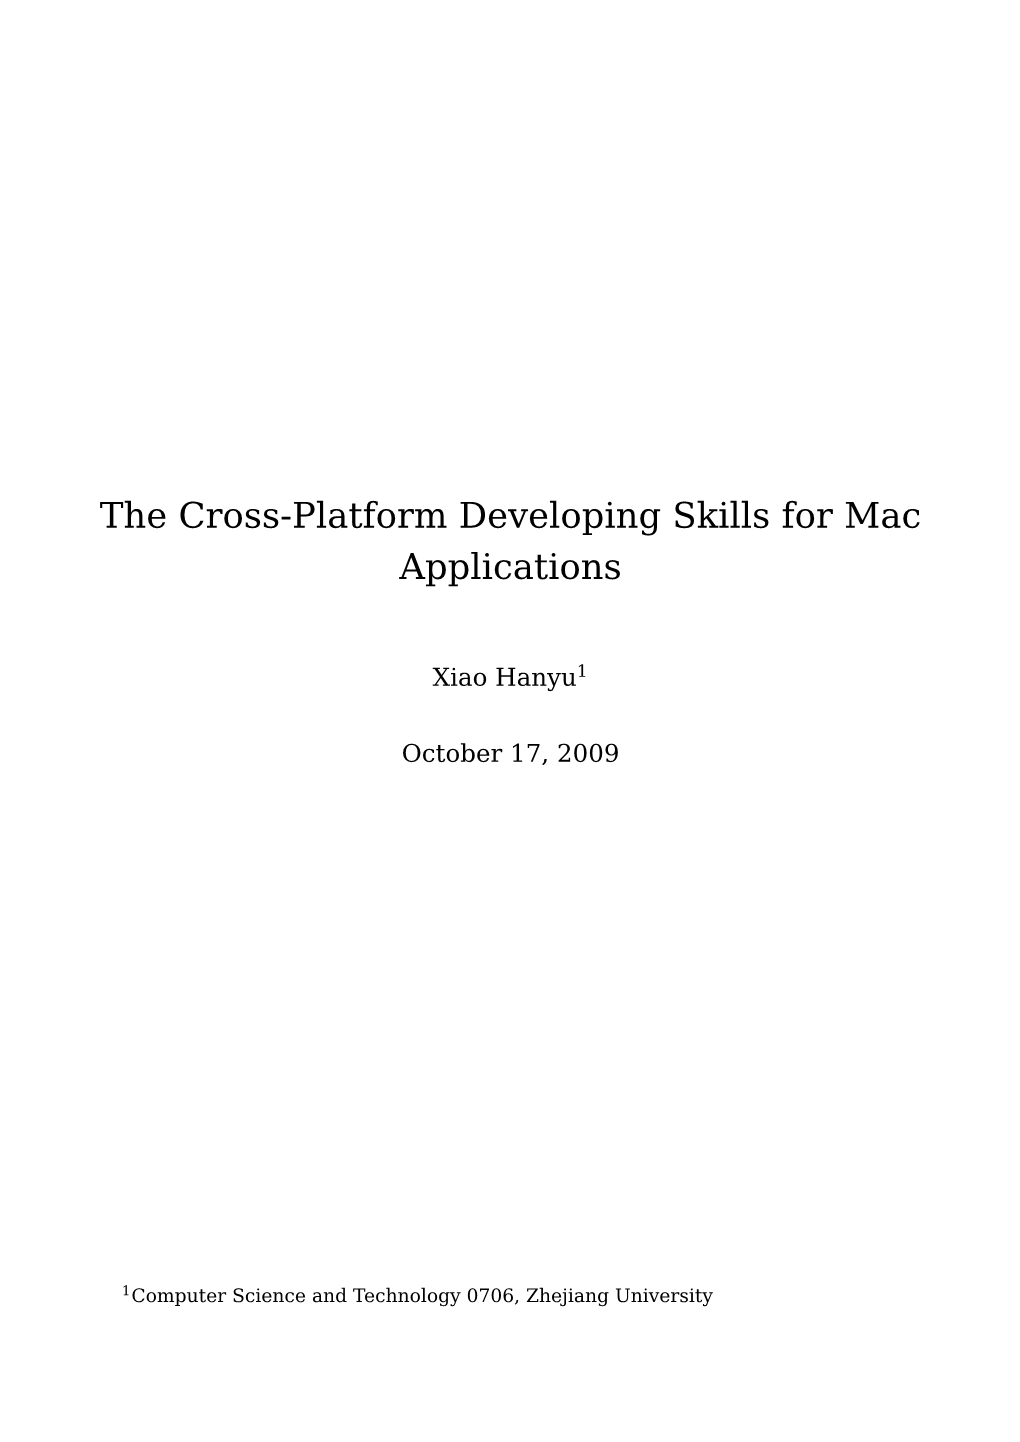 The Cross-Platform Developing Skills for Mac Applications